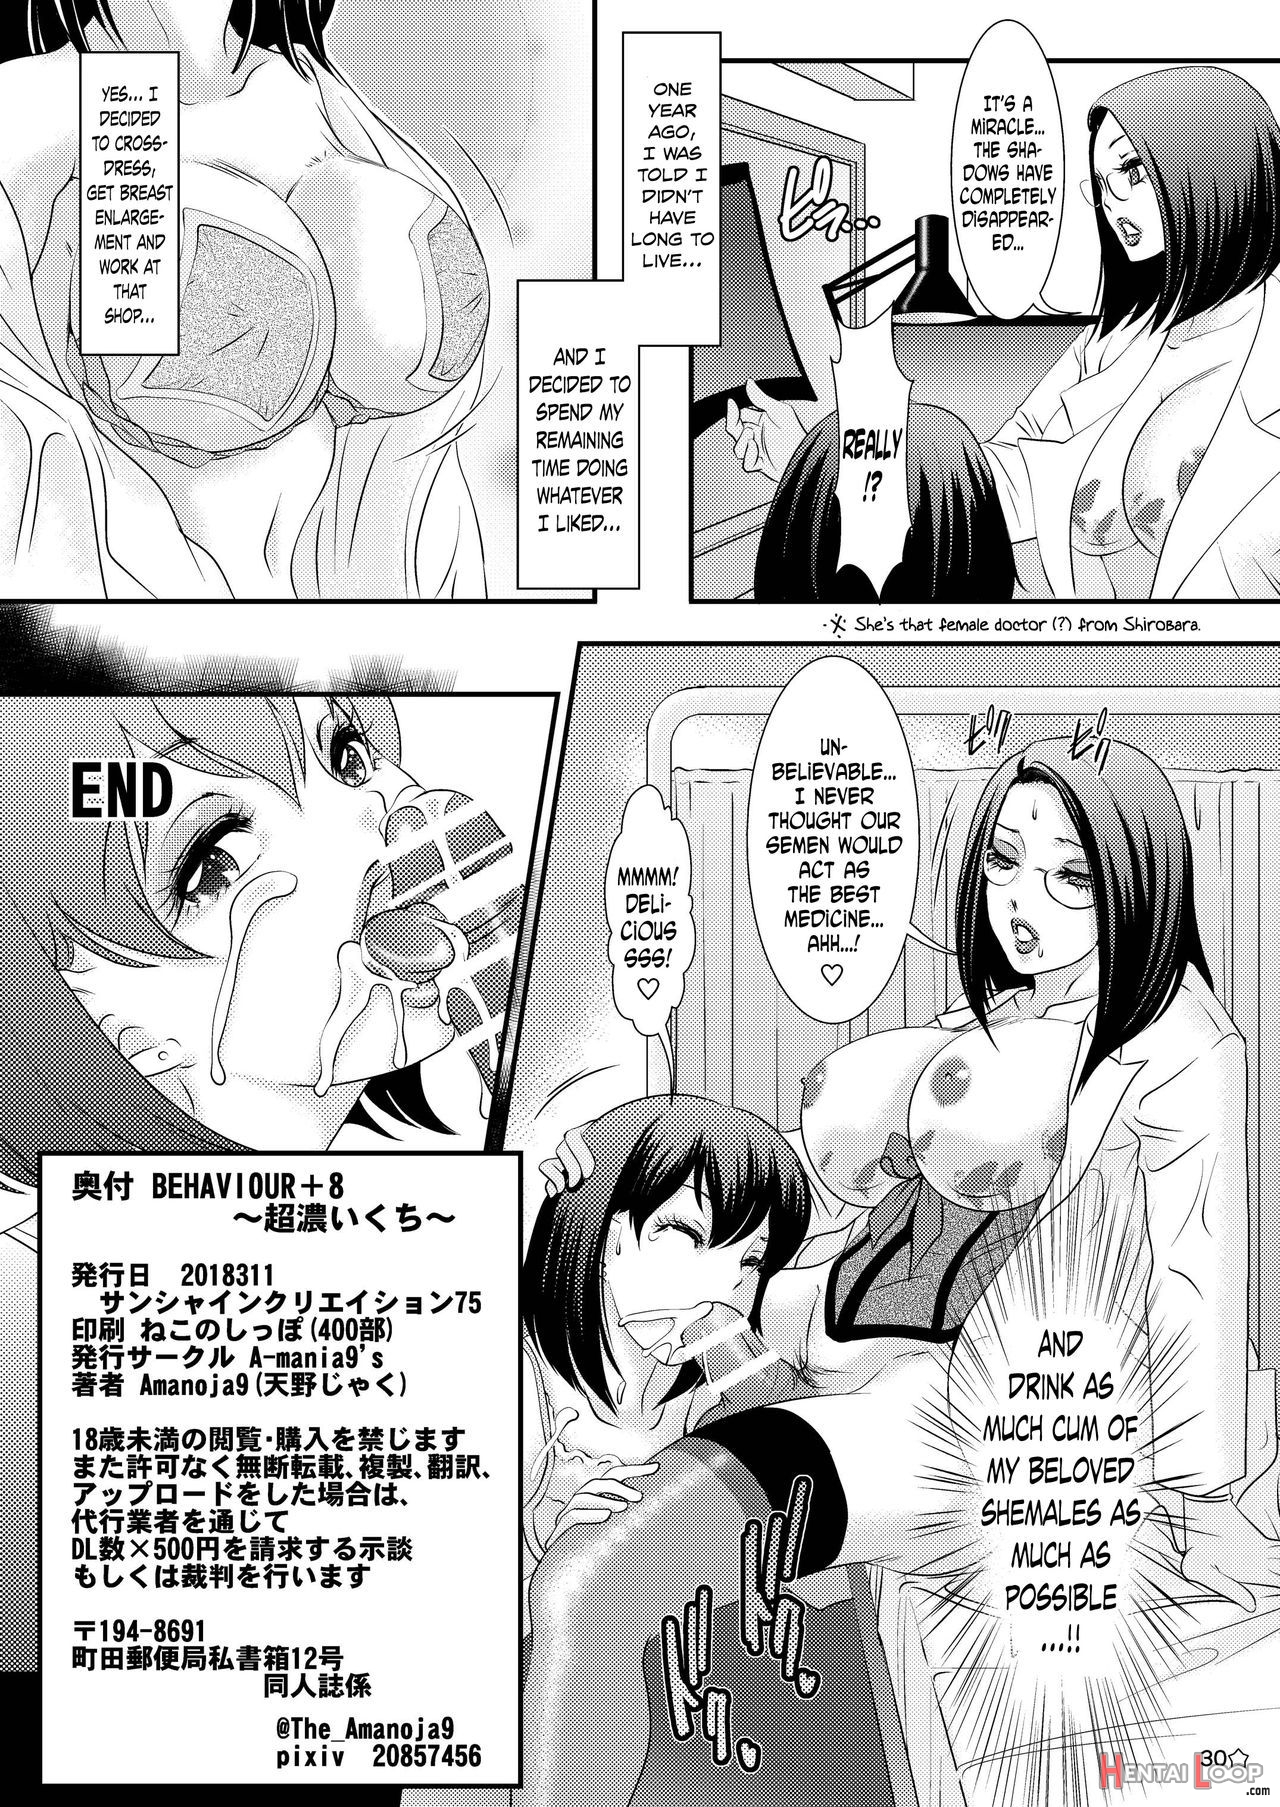 Behaviour+8 Chouâ˜†koikuchi page 31